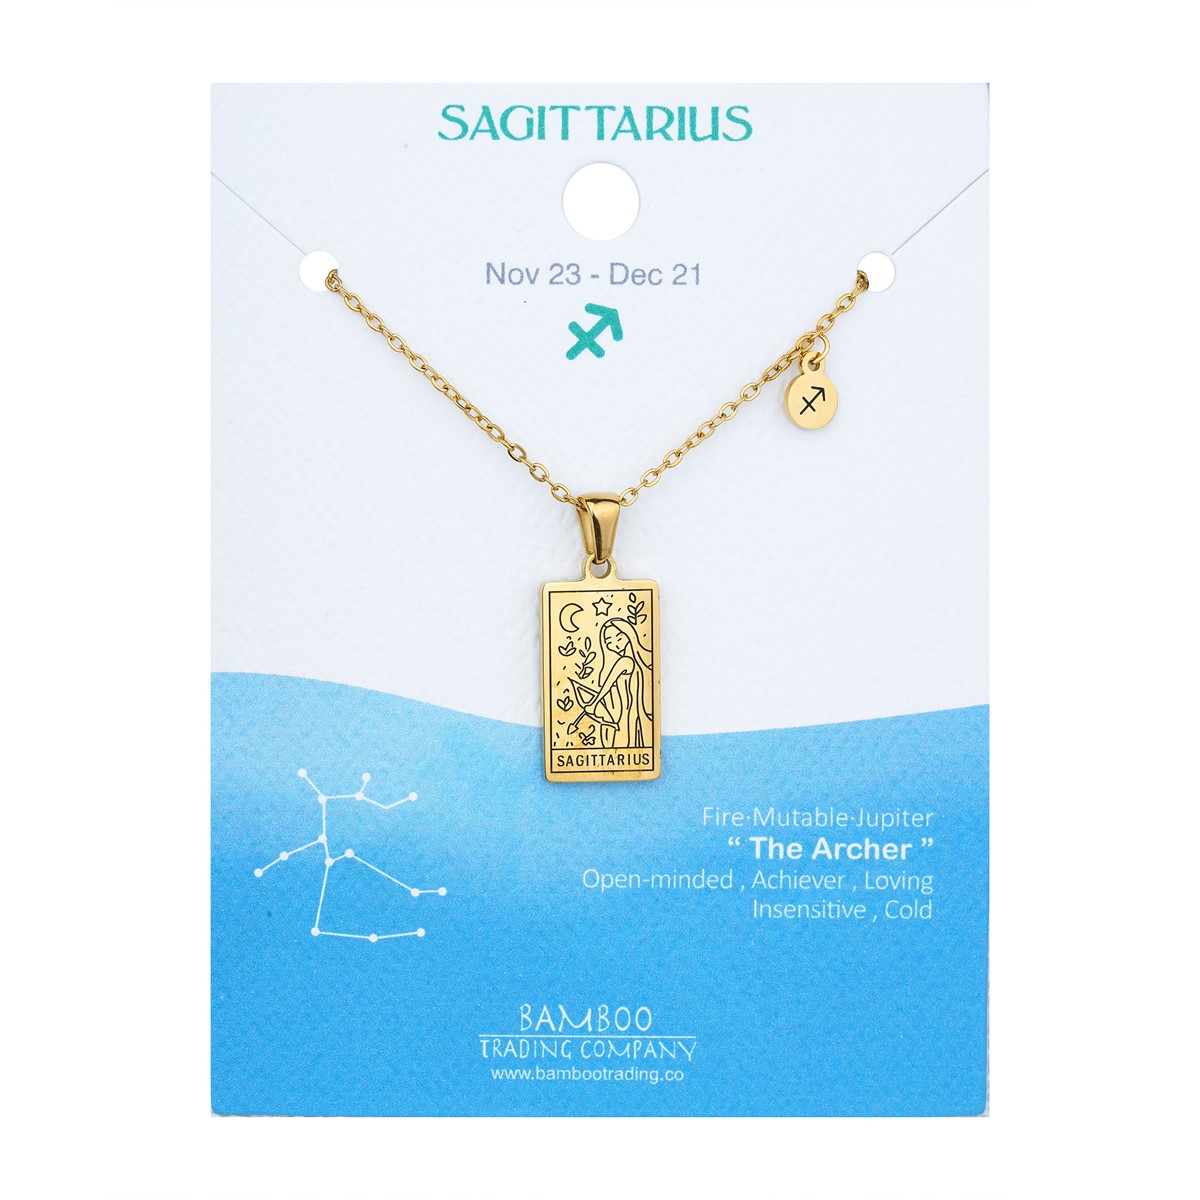 Zodiac Sagittarius Trading Gold Company | Bamboo Necklace